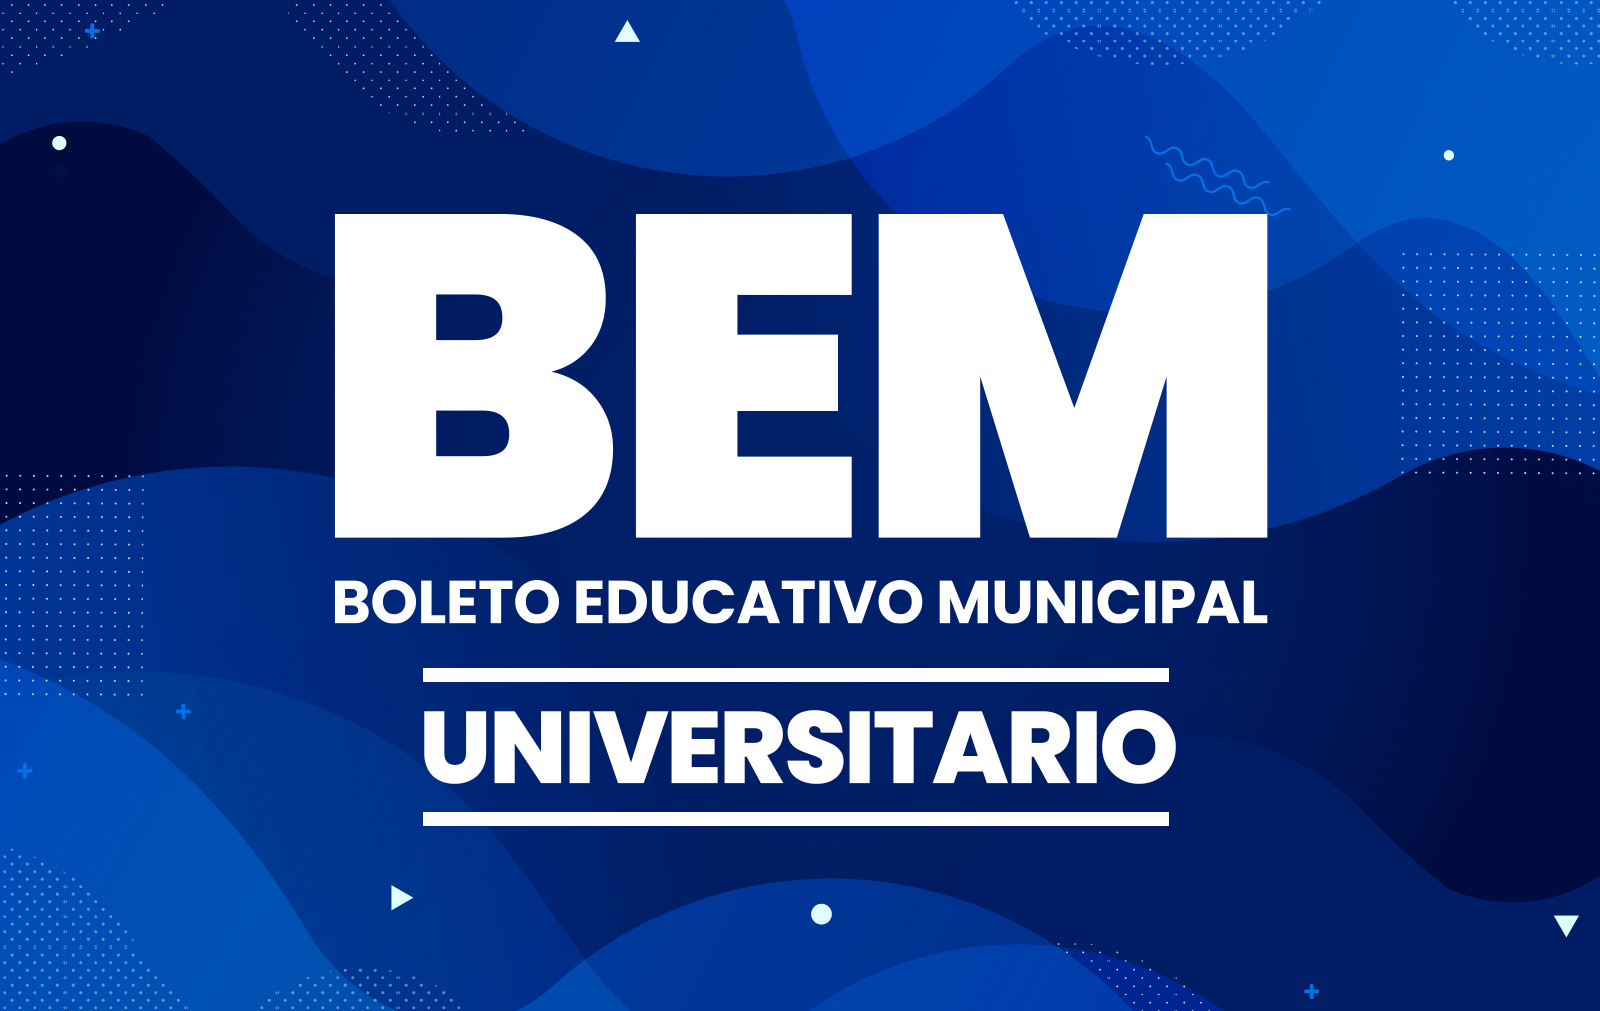 BUG - Boleto Educativo Municipal Universitario